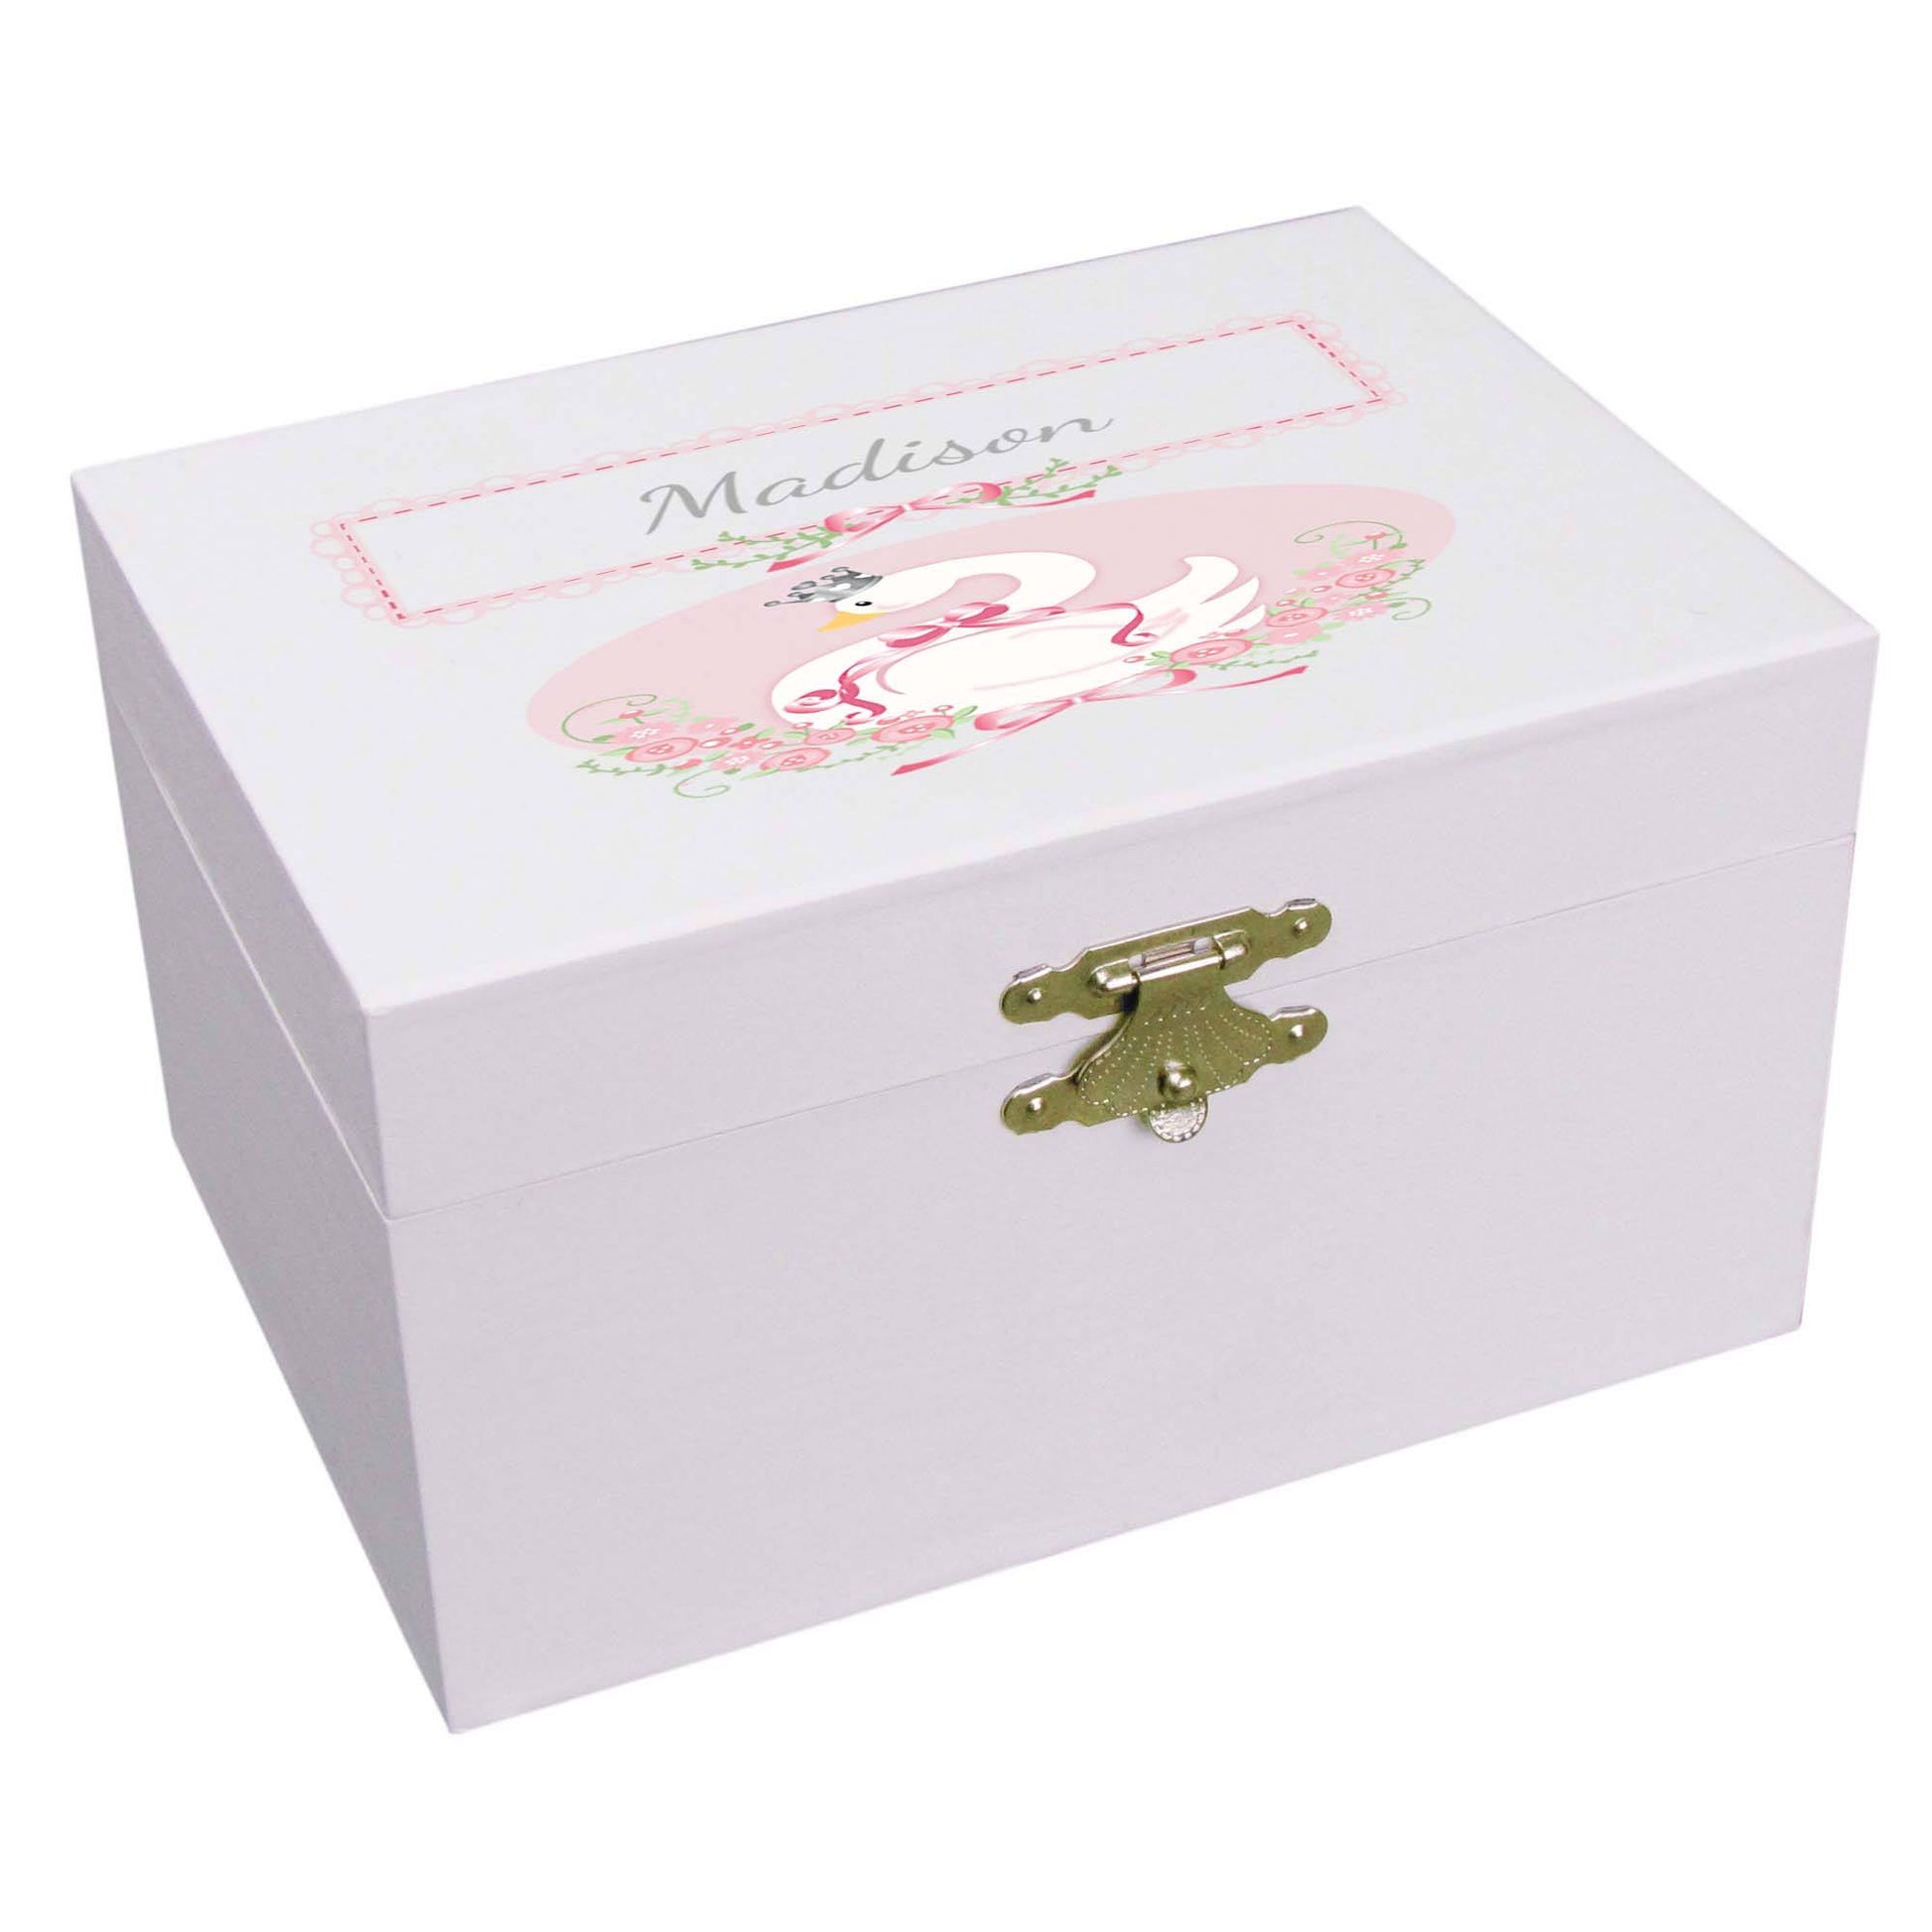 Personalized Ballerina Jewelry Box with Swan design